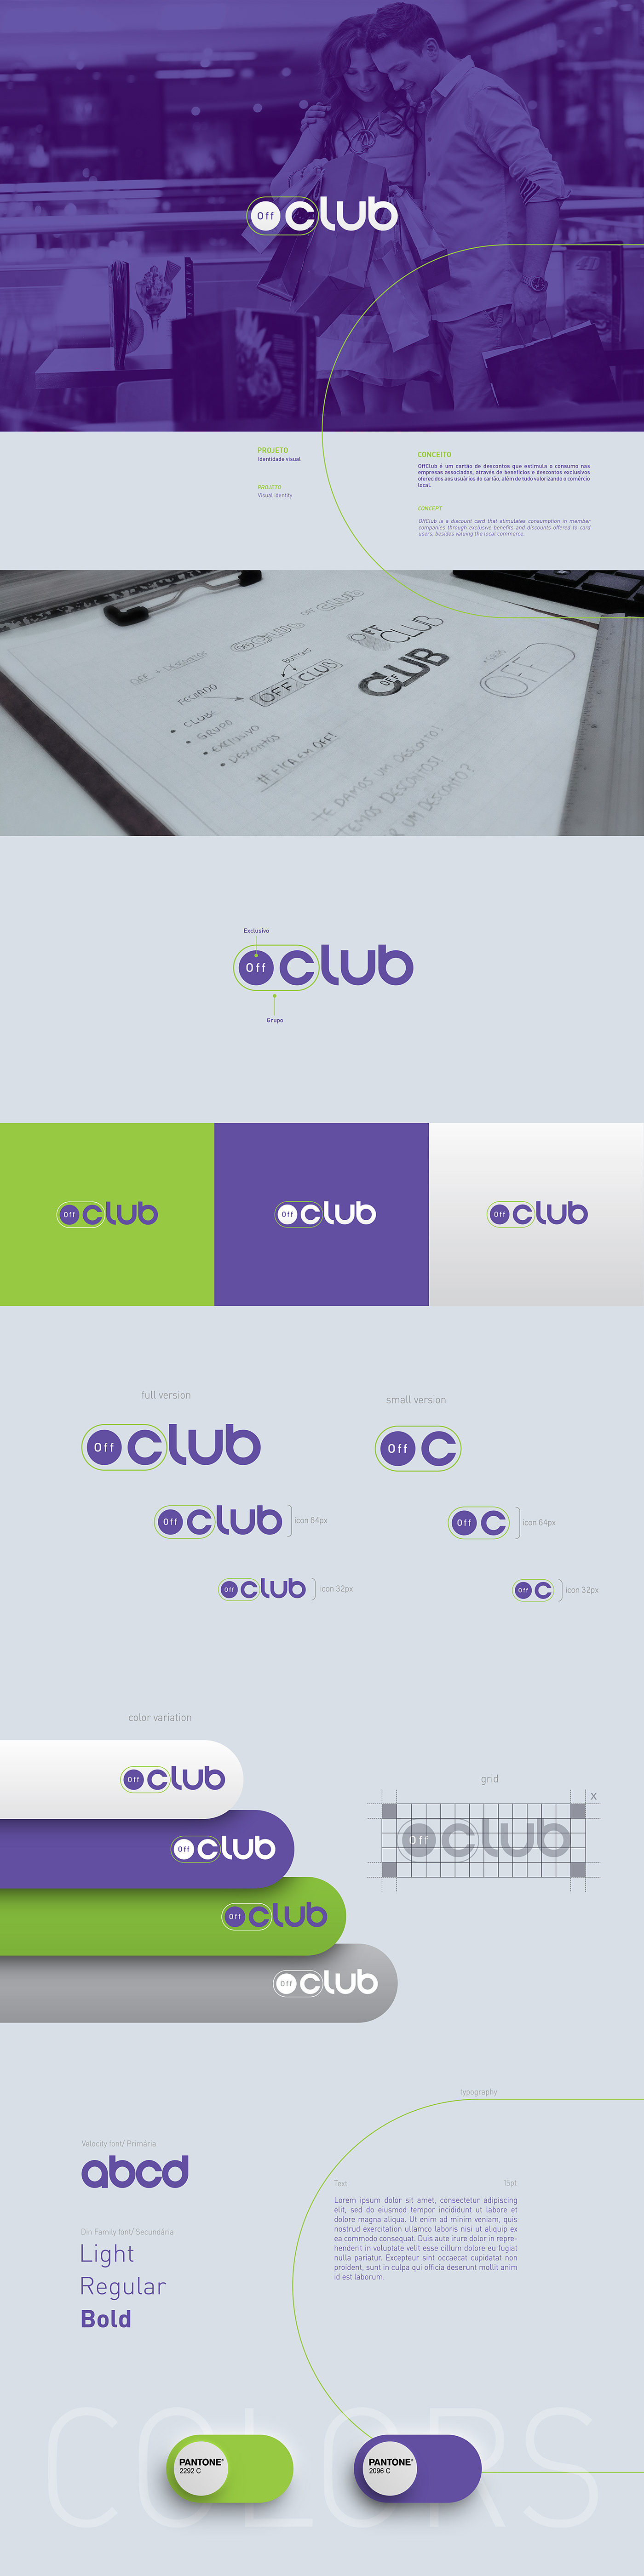 brand identity brand visual identity marca logo card Logotype identity descont design